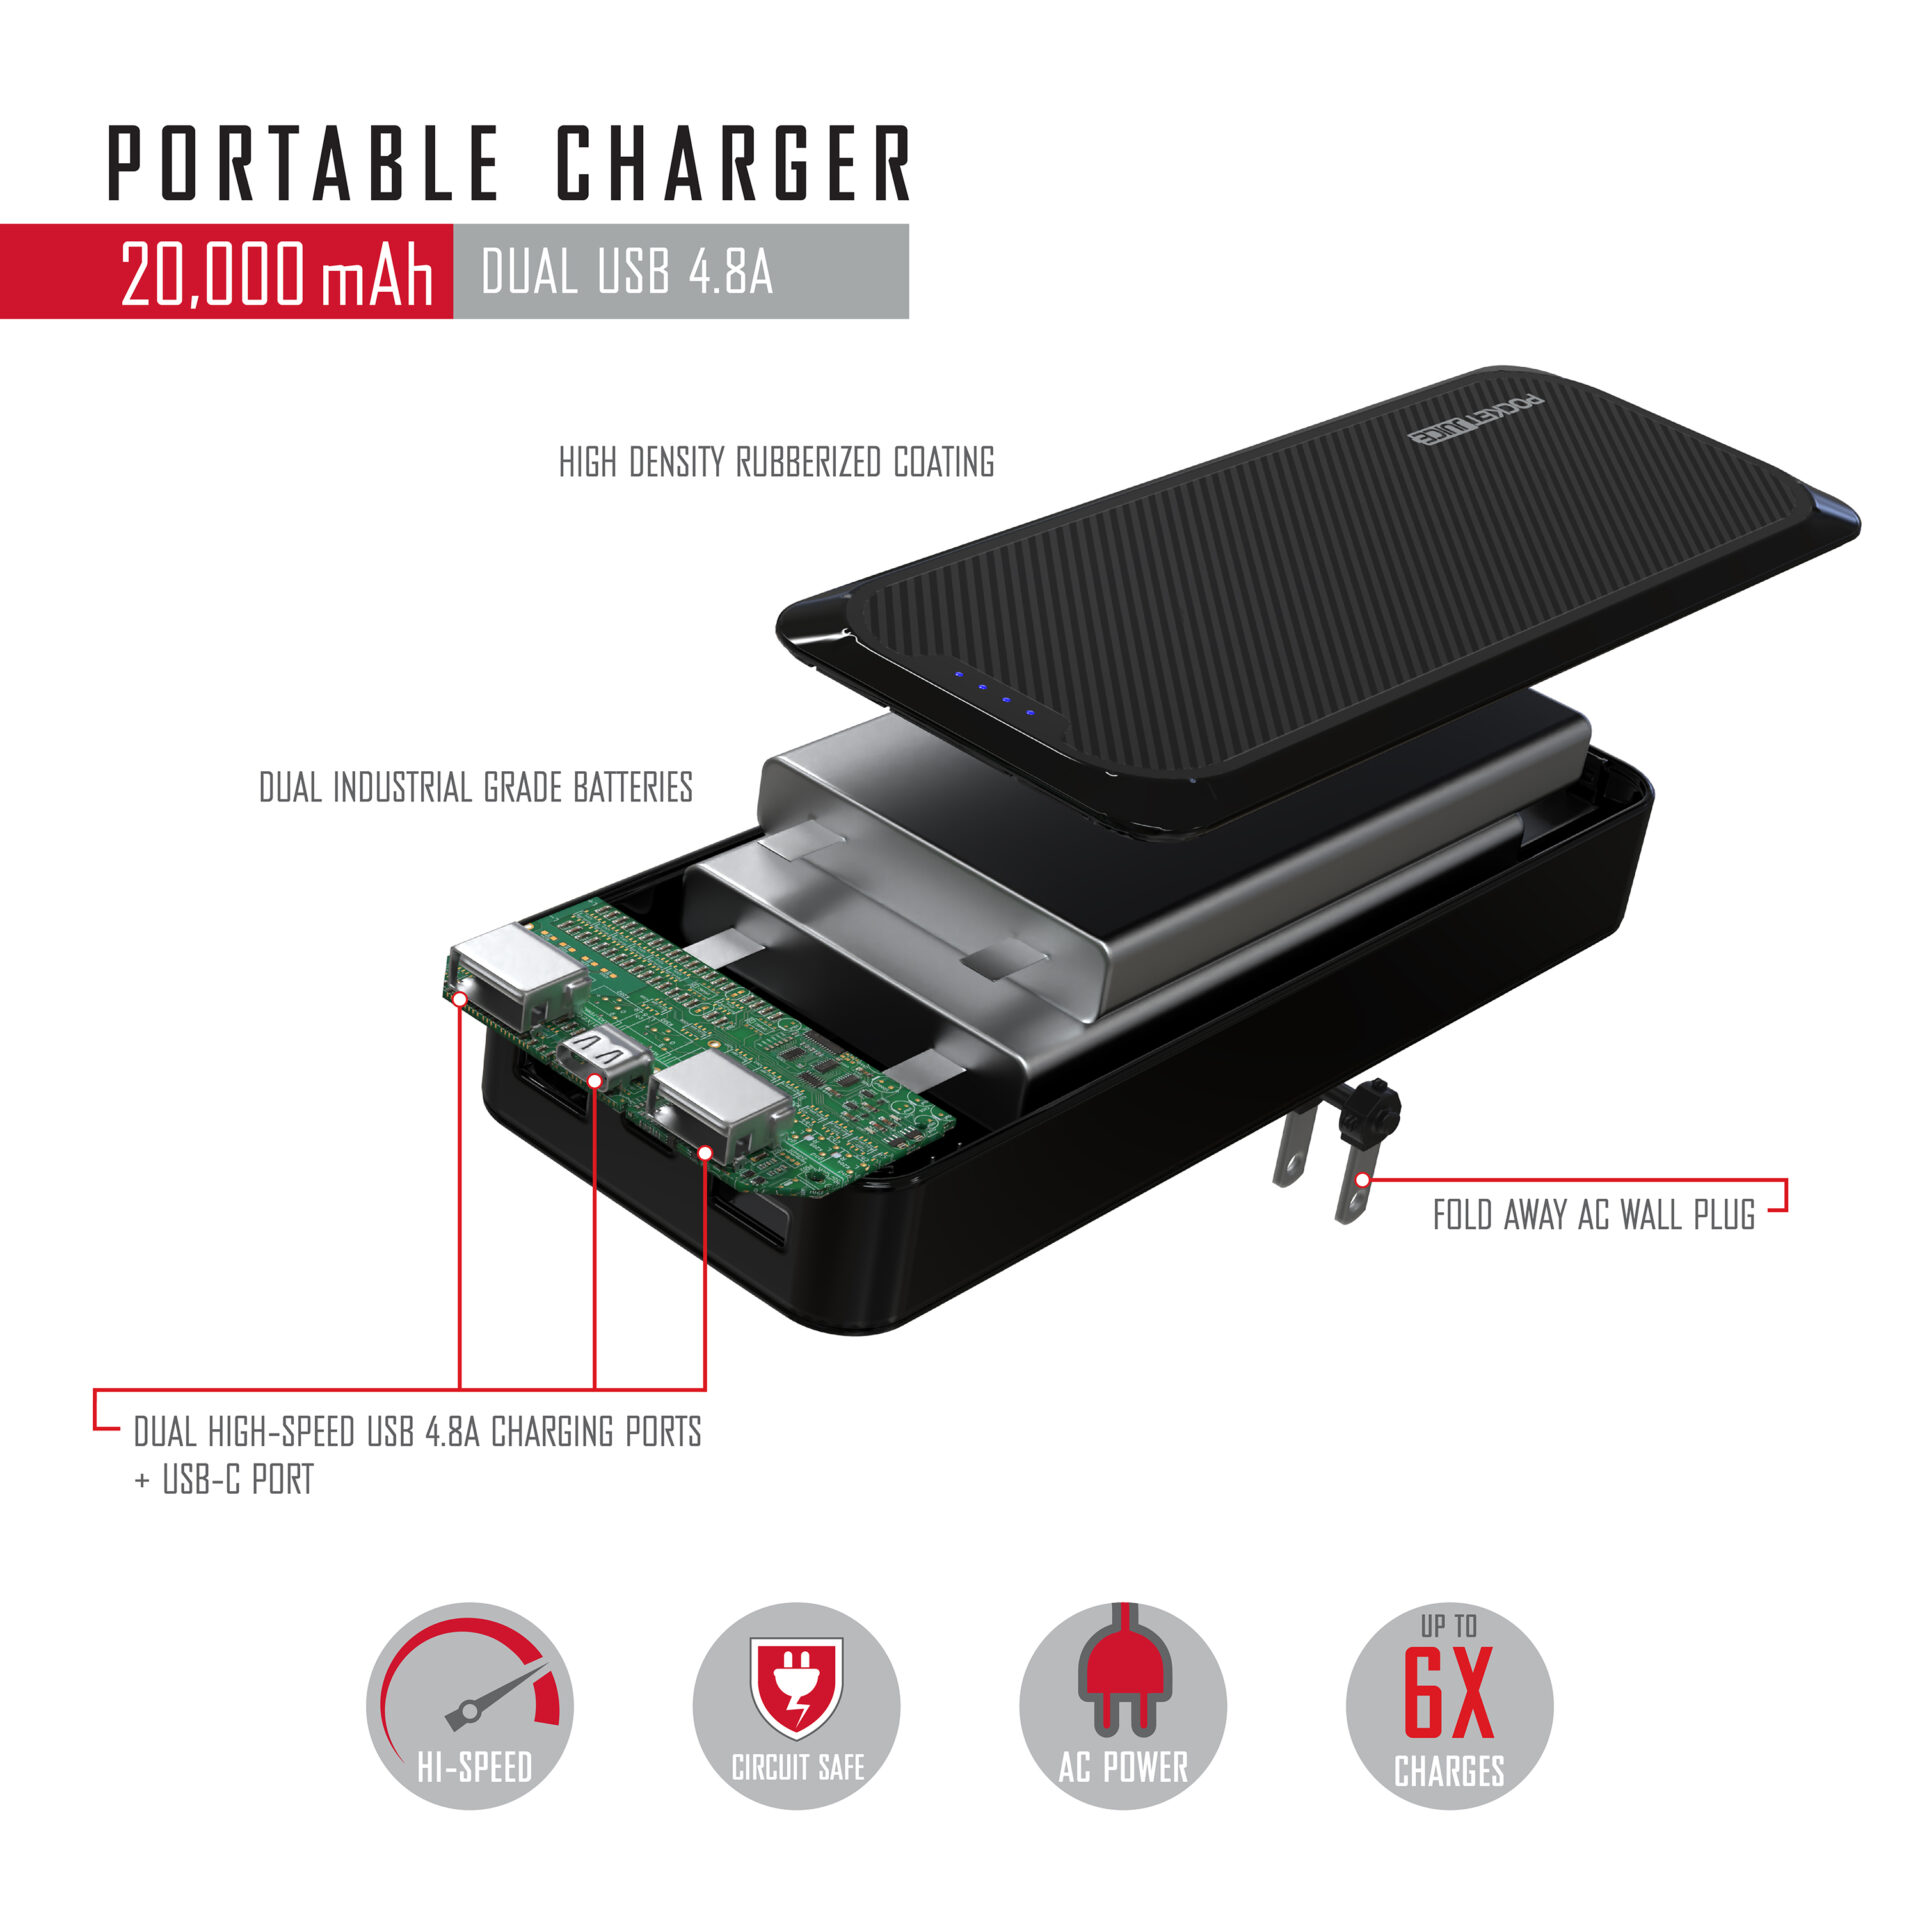 Pocket Powerbank with two USB ports